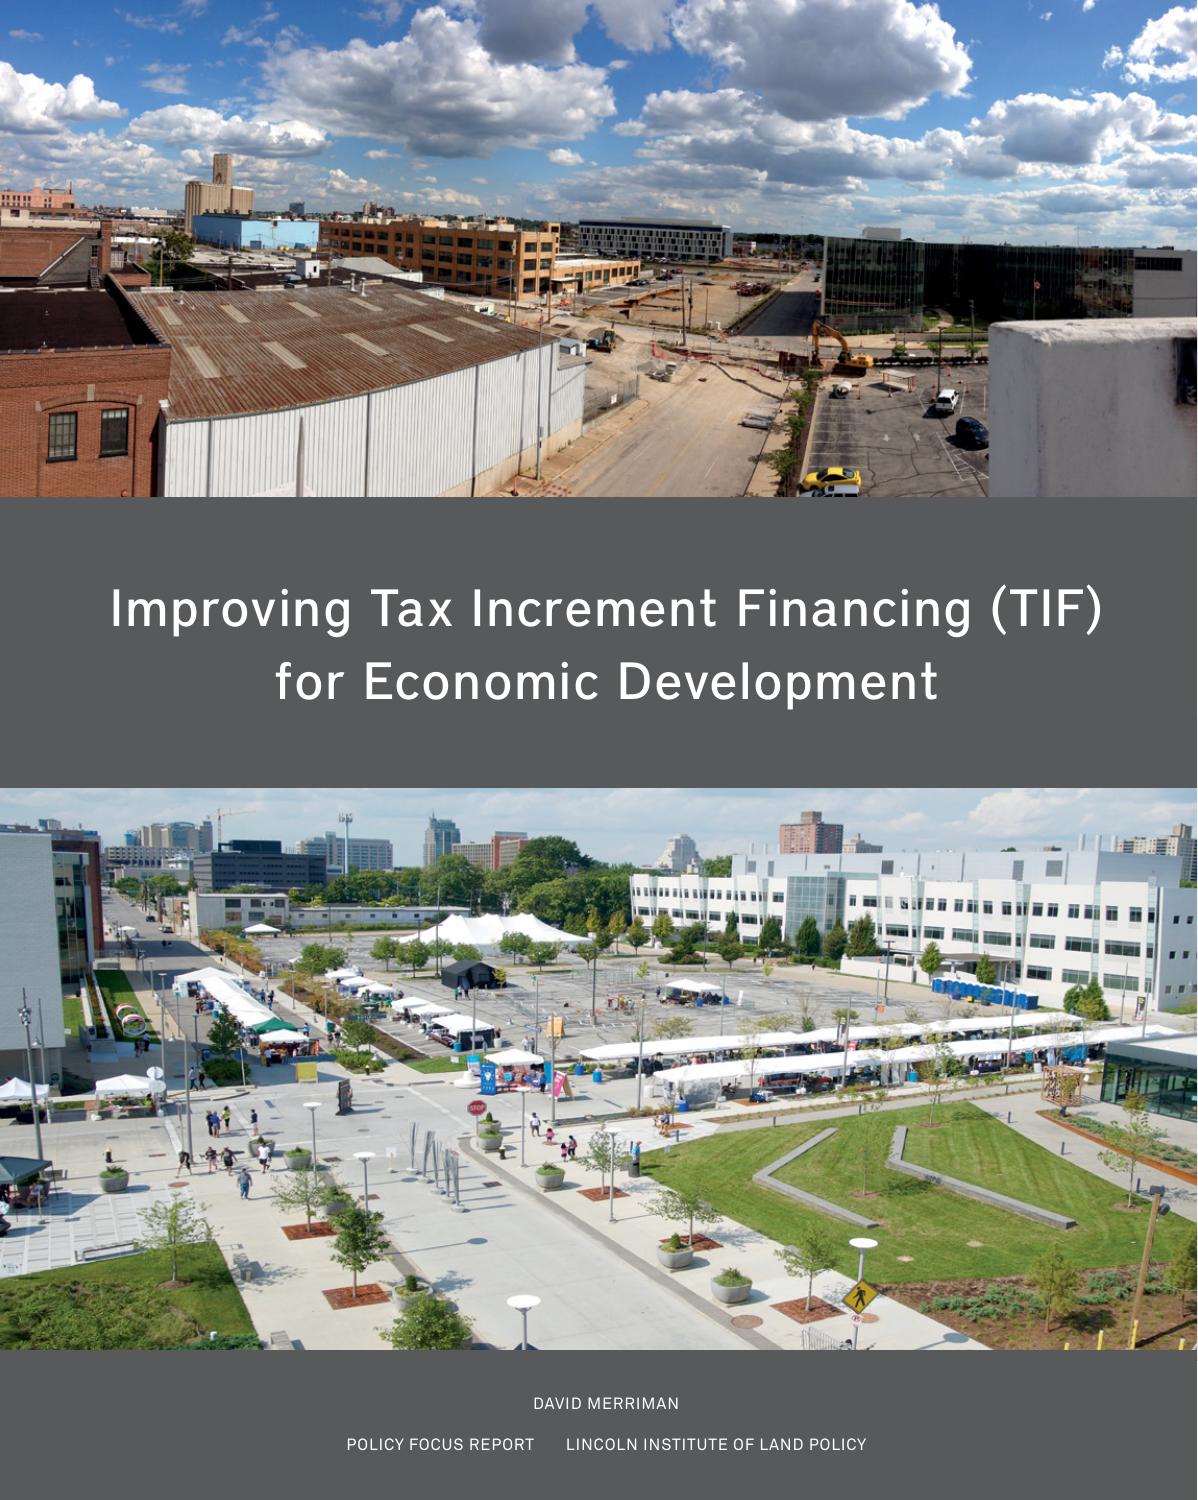 Improving Tax Increment Financing (TIF) for Economic Development by David Merriman